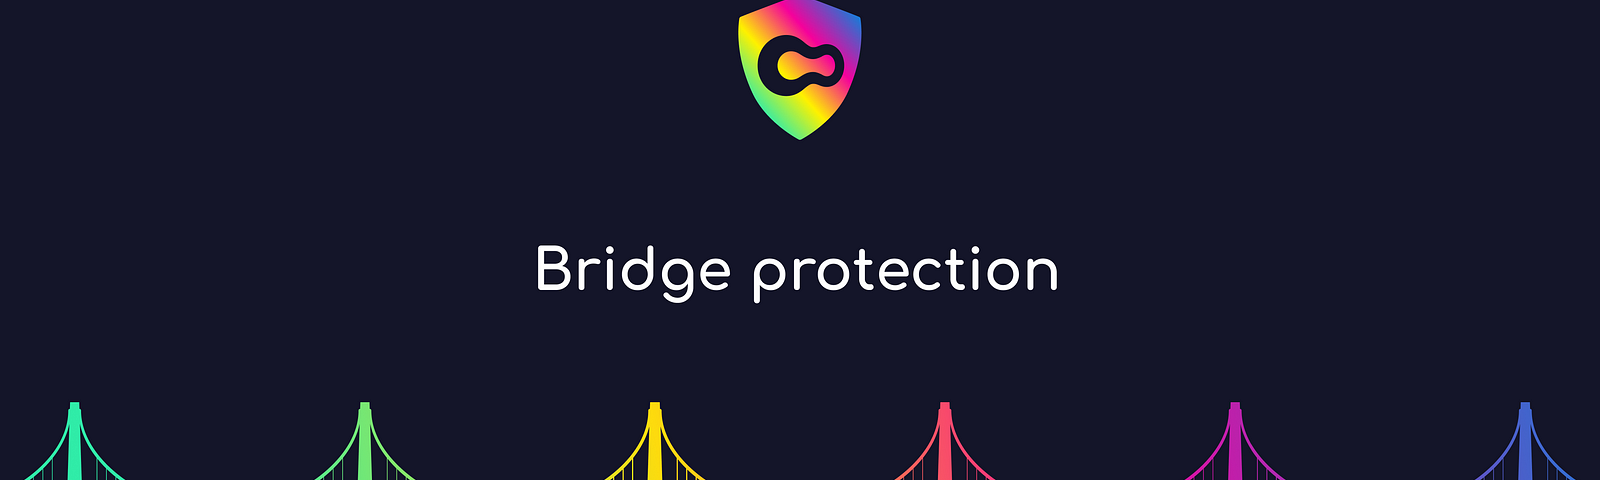 Bridge protection is a decentralized insurance for side-chain bridges